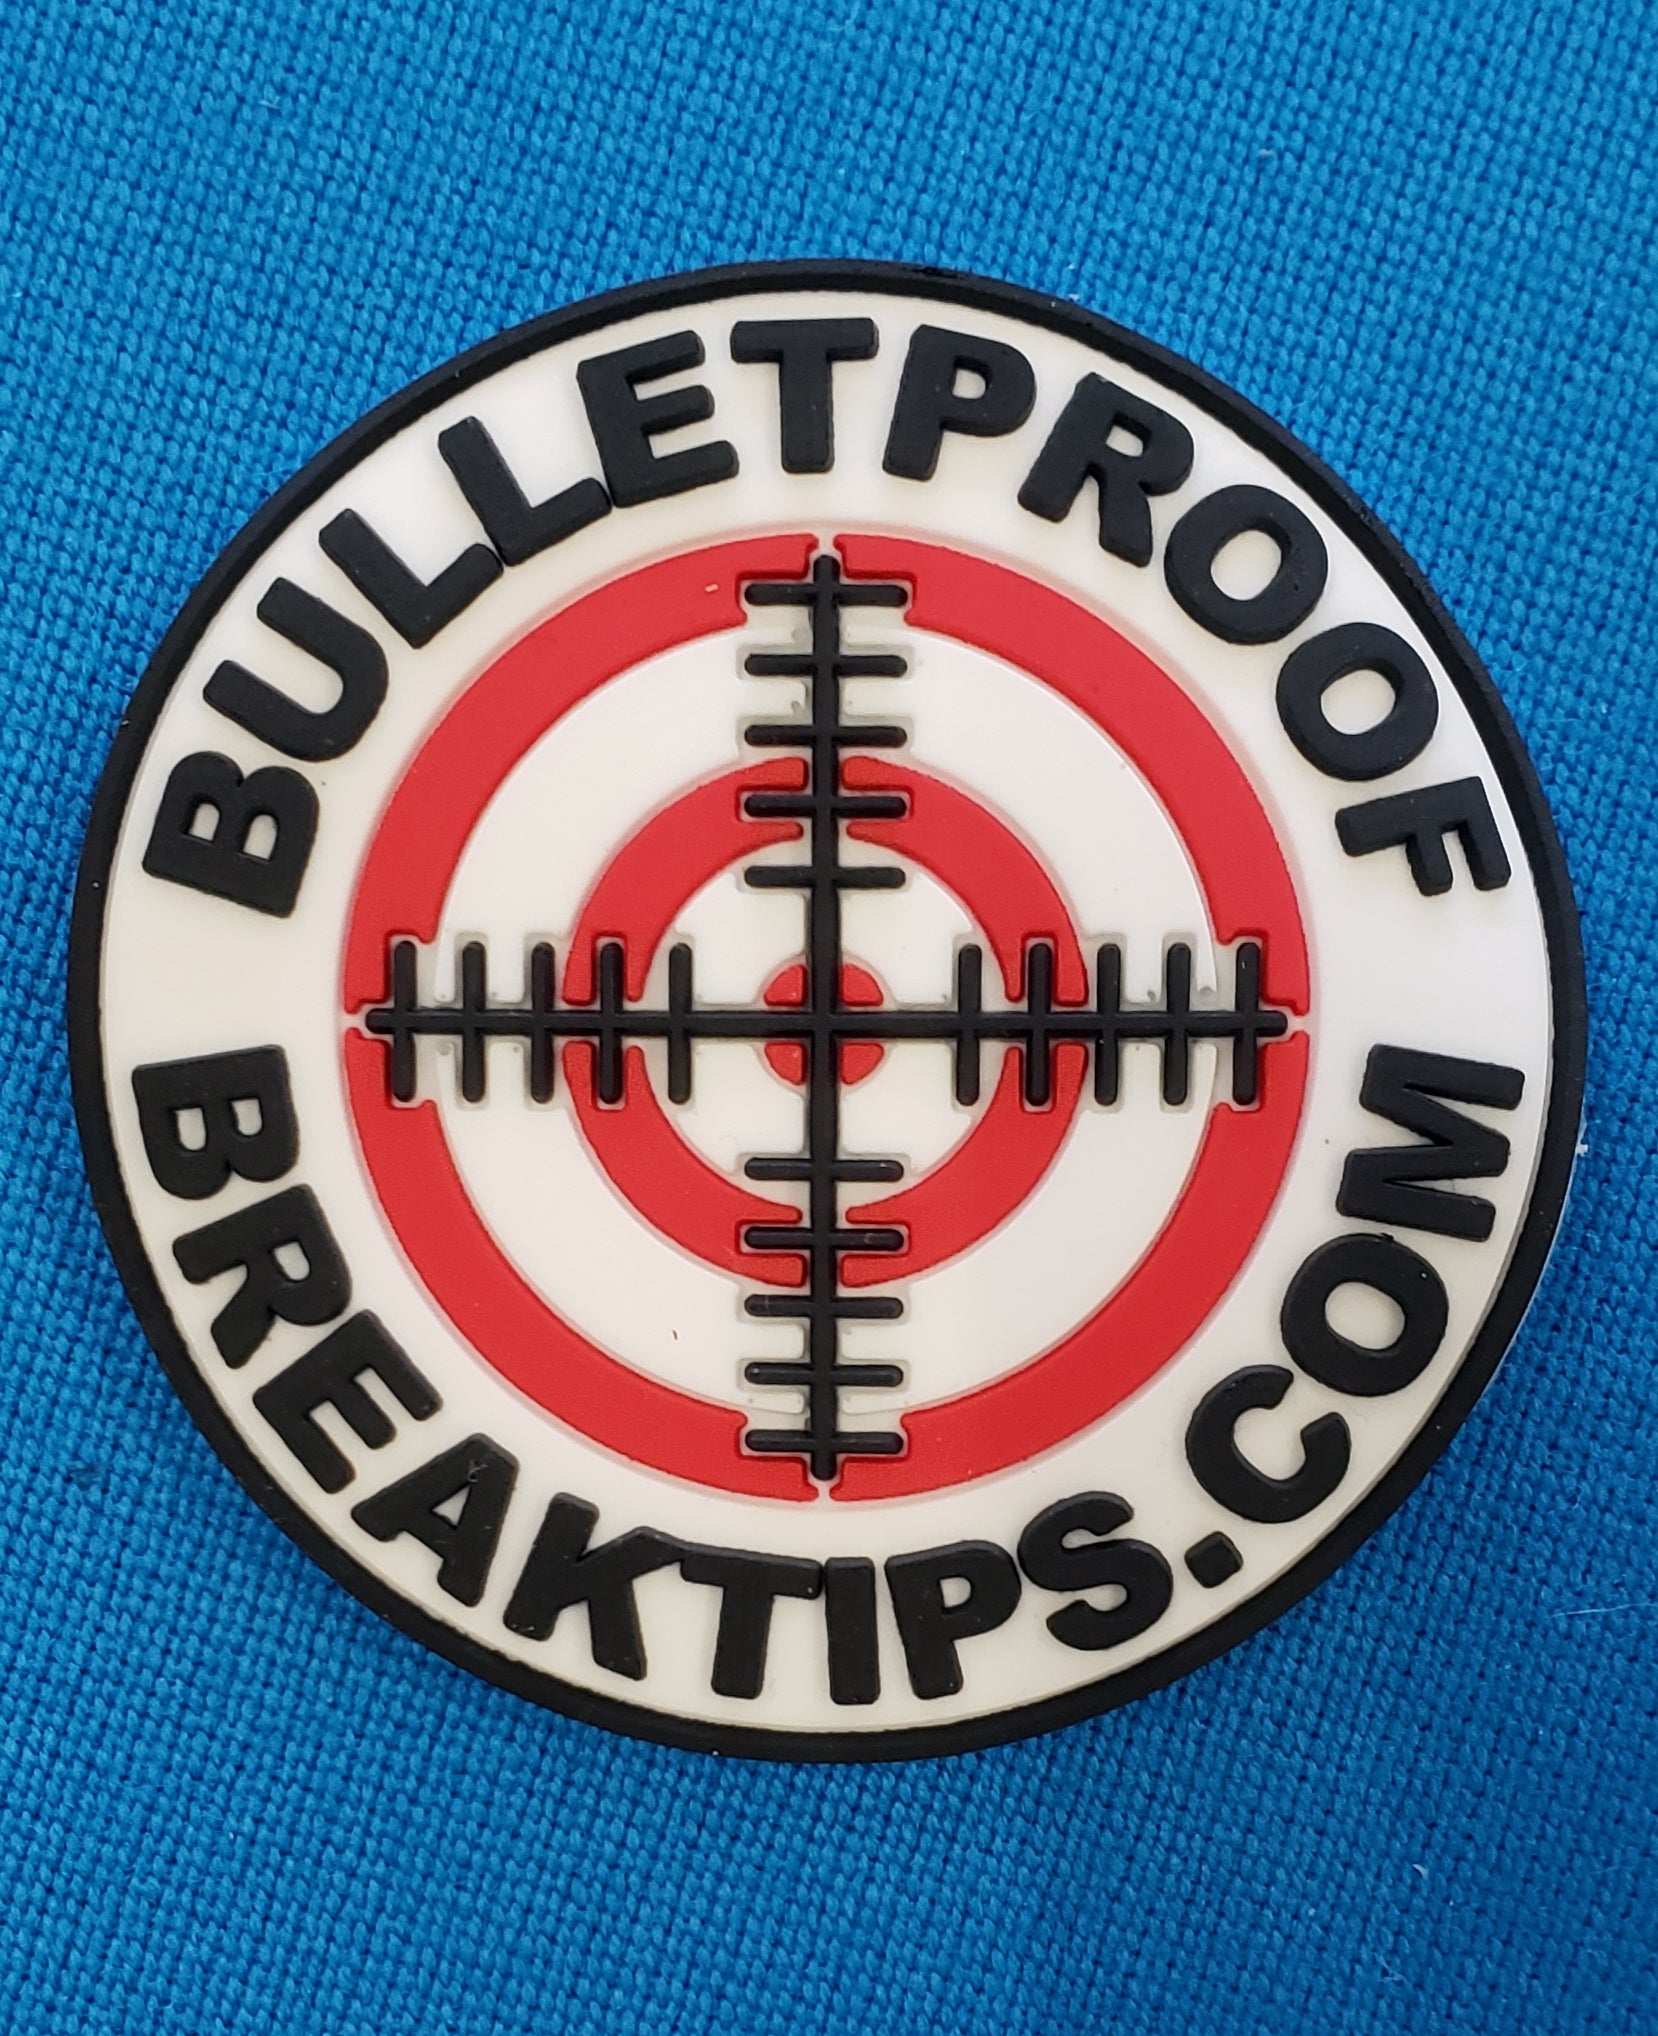 Bulletproof Break Tip Patch